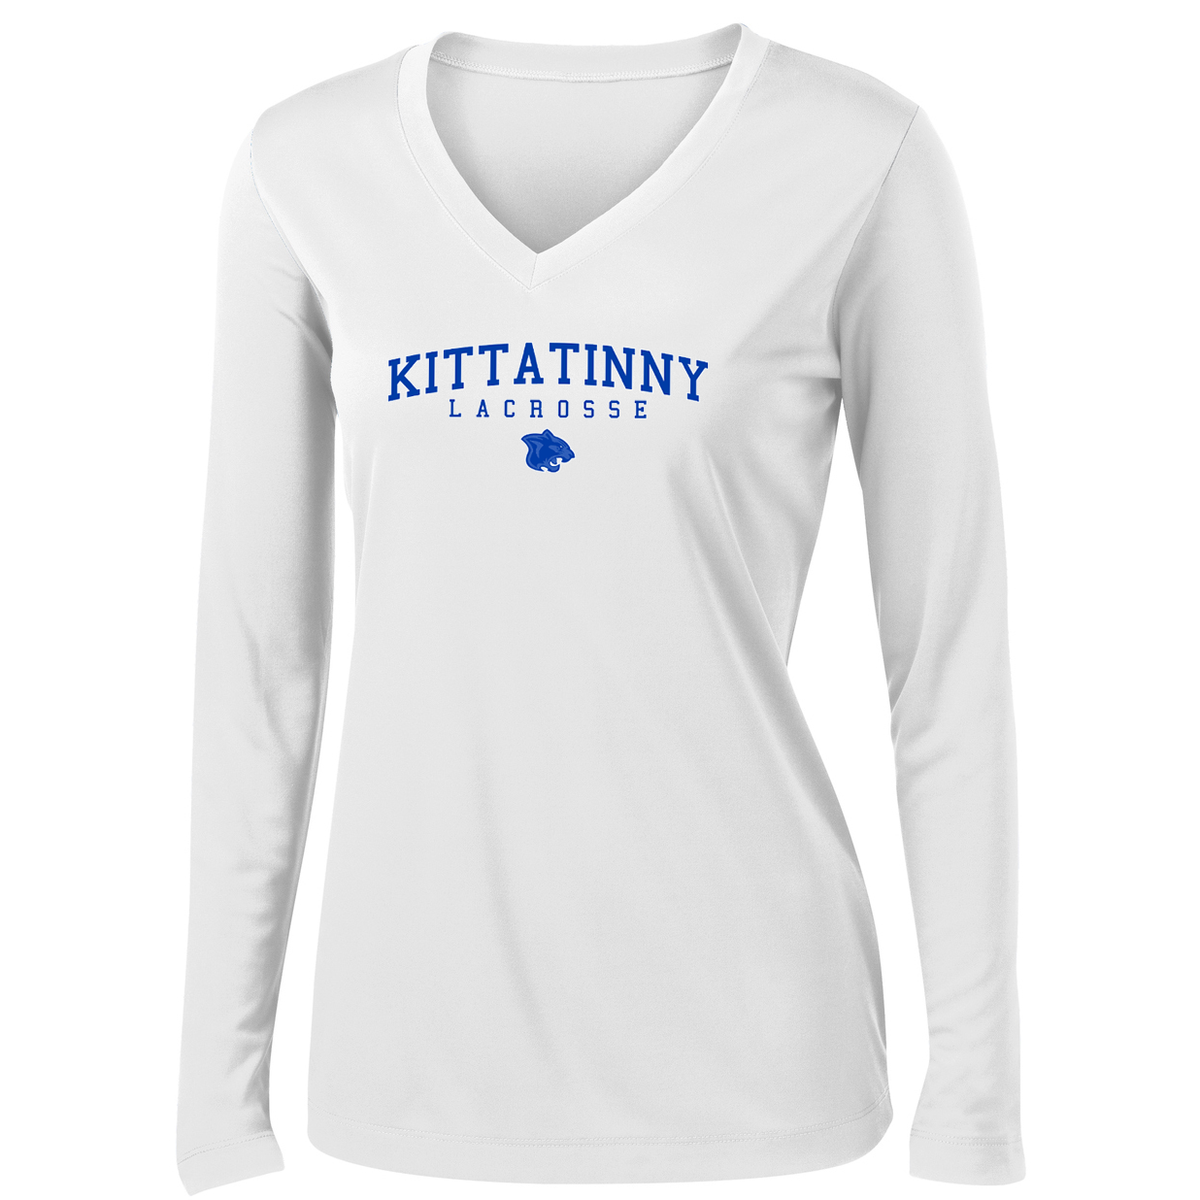 Kittatinny Lacrosse Women's Long Sleeve Performance Shirt